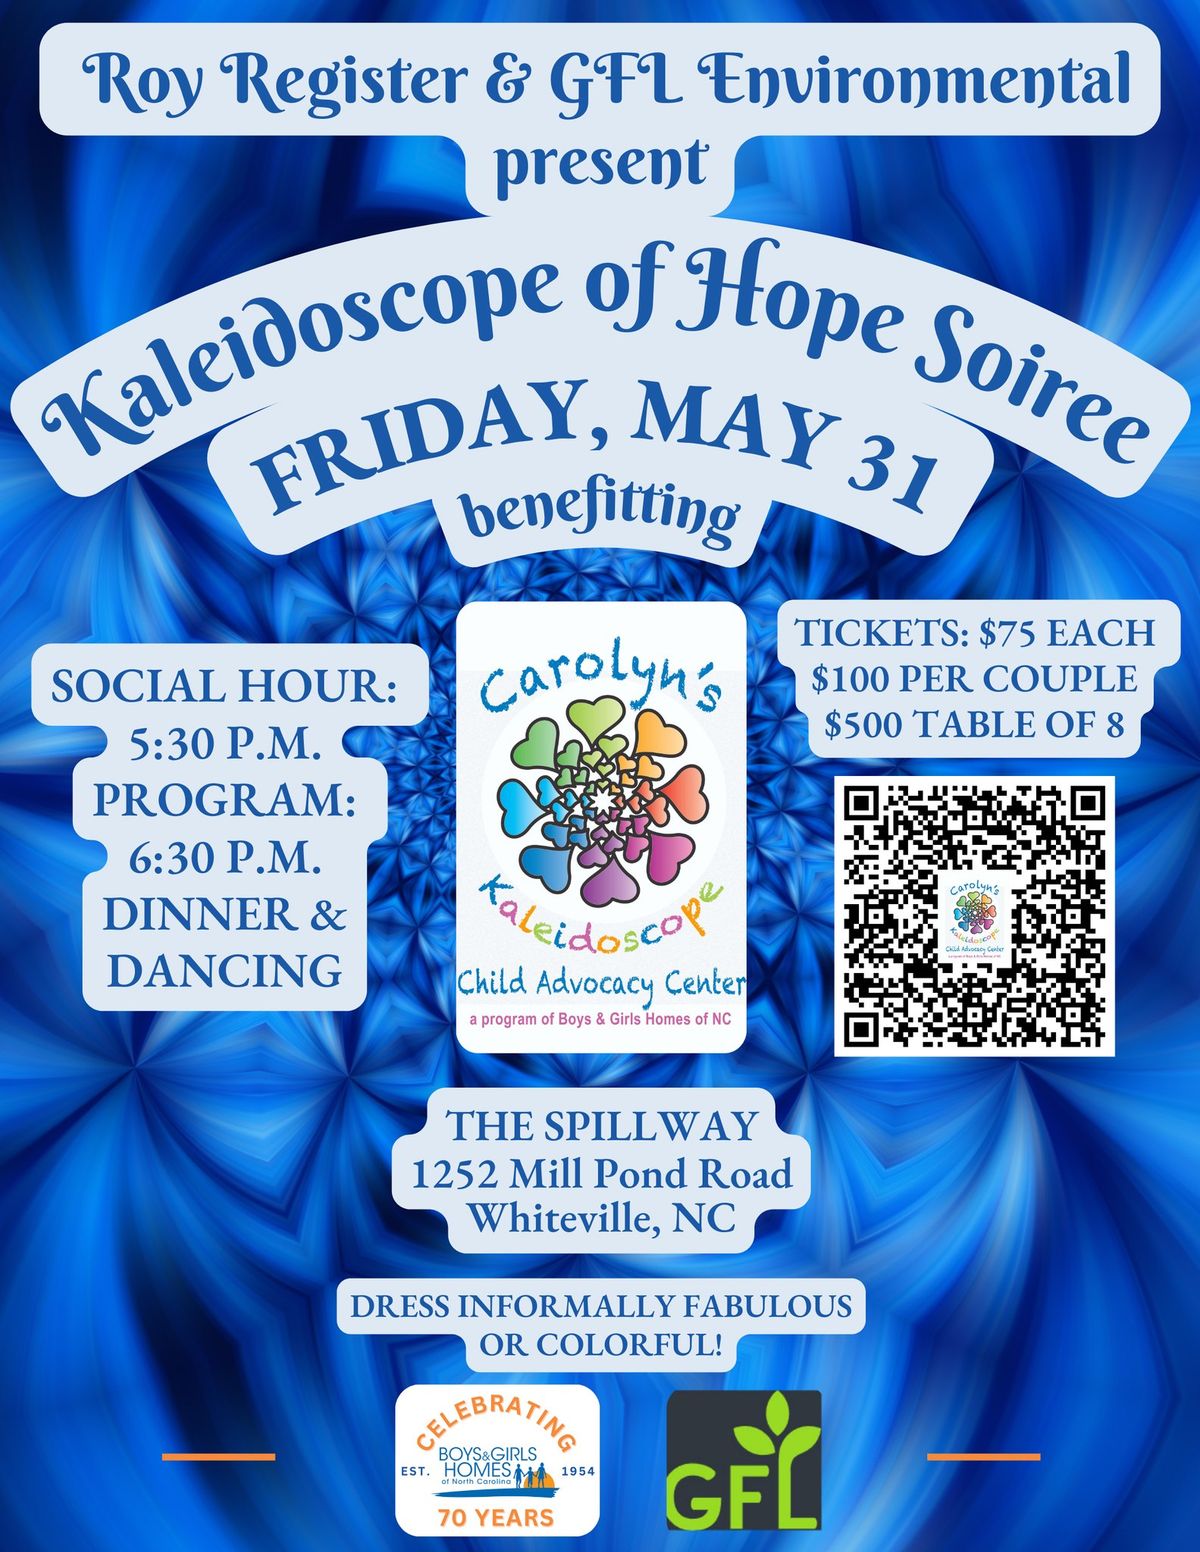 Kaleidoscope of Hope Soiree - to benefit Carolyn's Kaleidoscope Child Advocacy Center